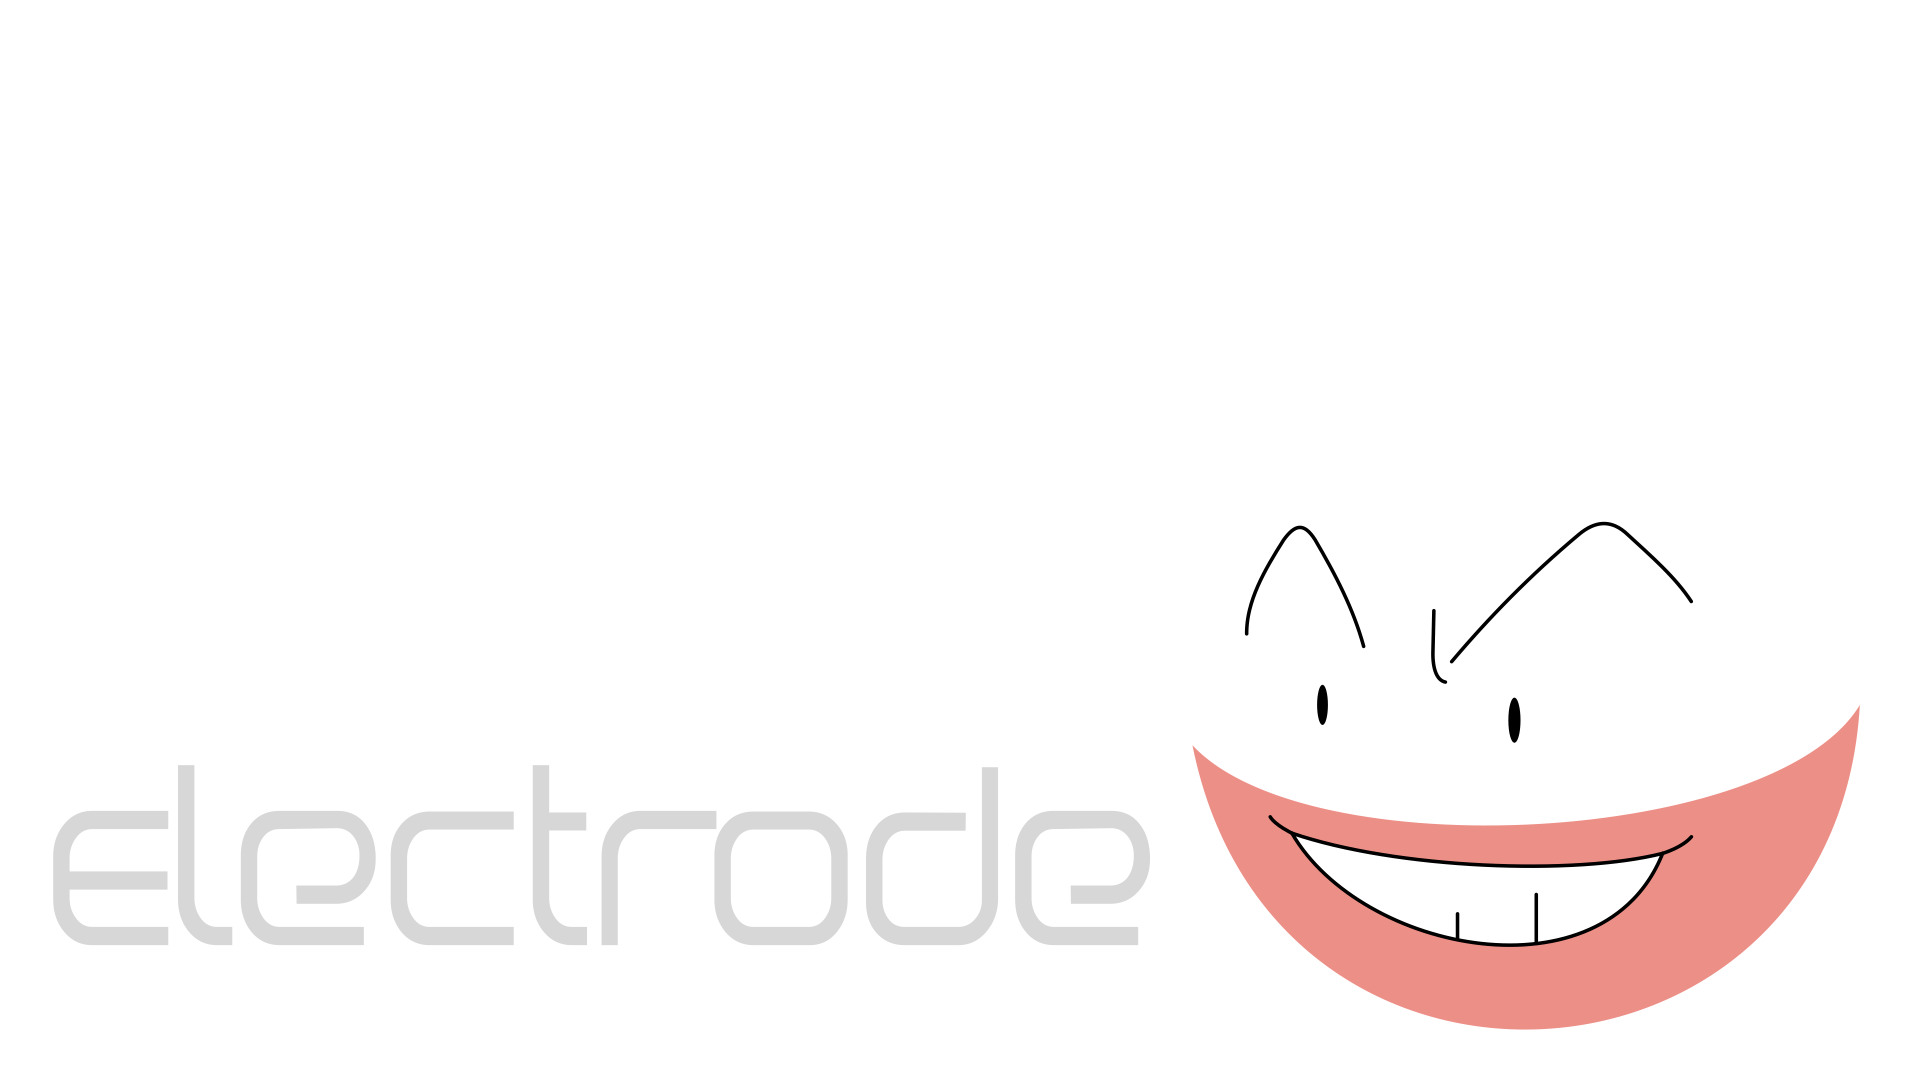 Download Electrode Pokémon Wallpaper Gallery